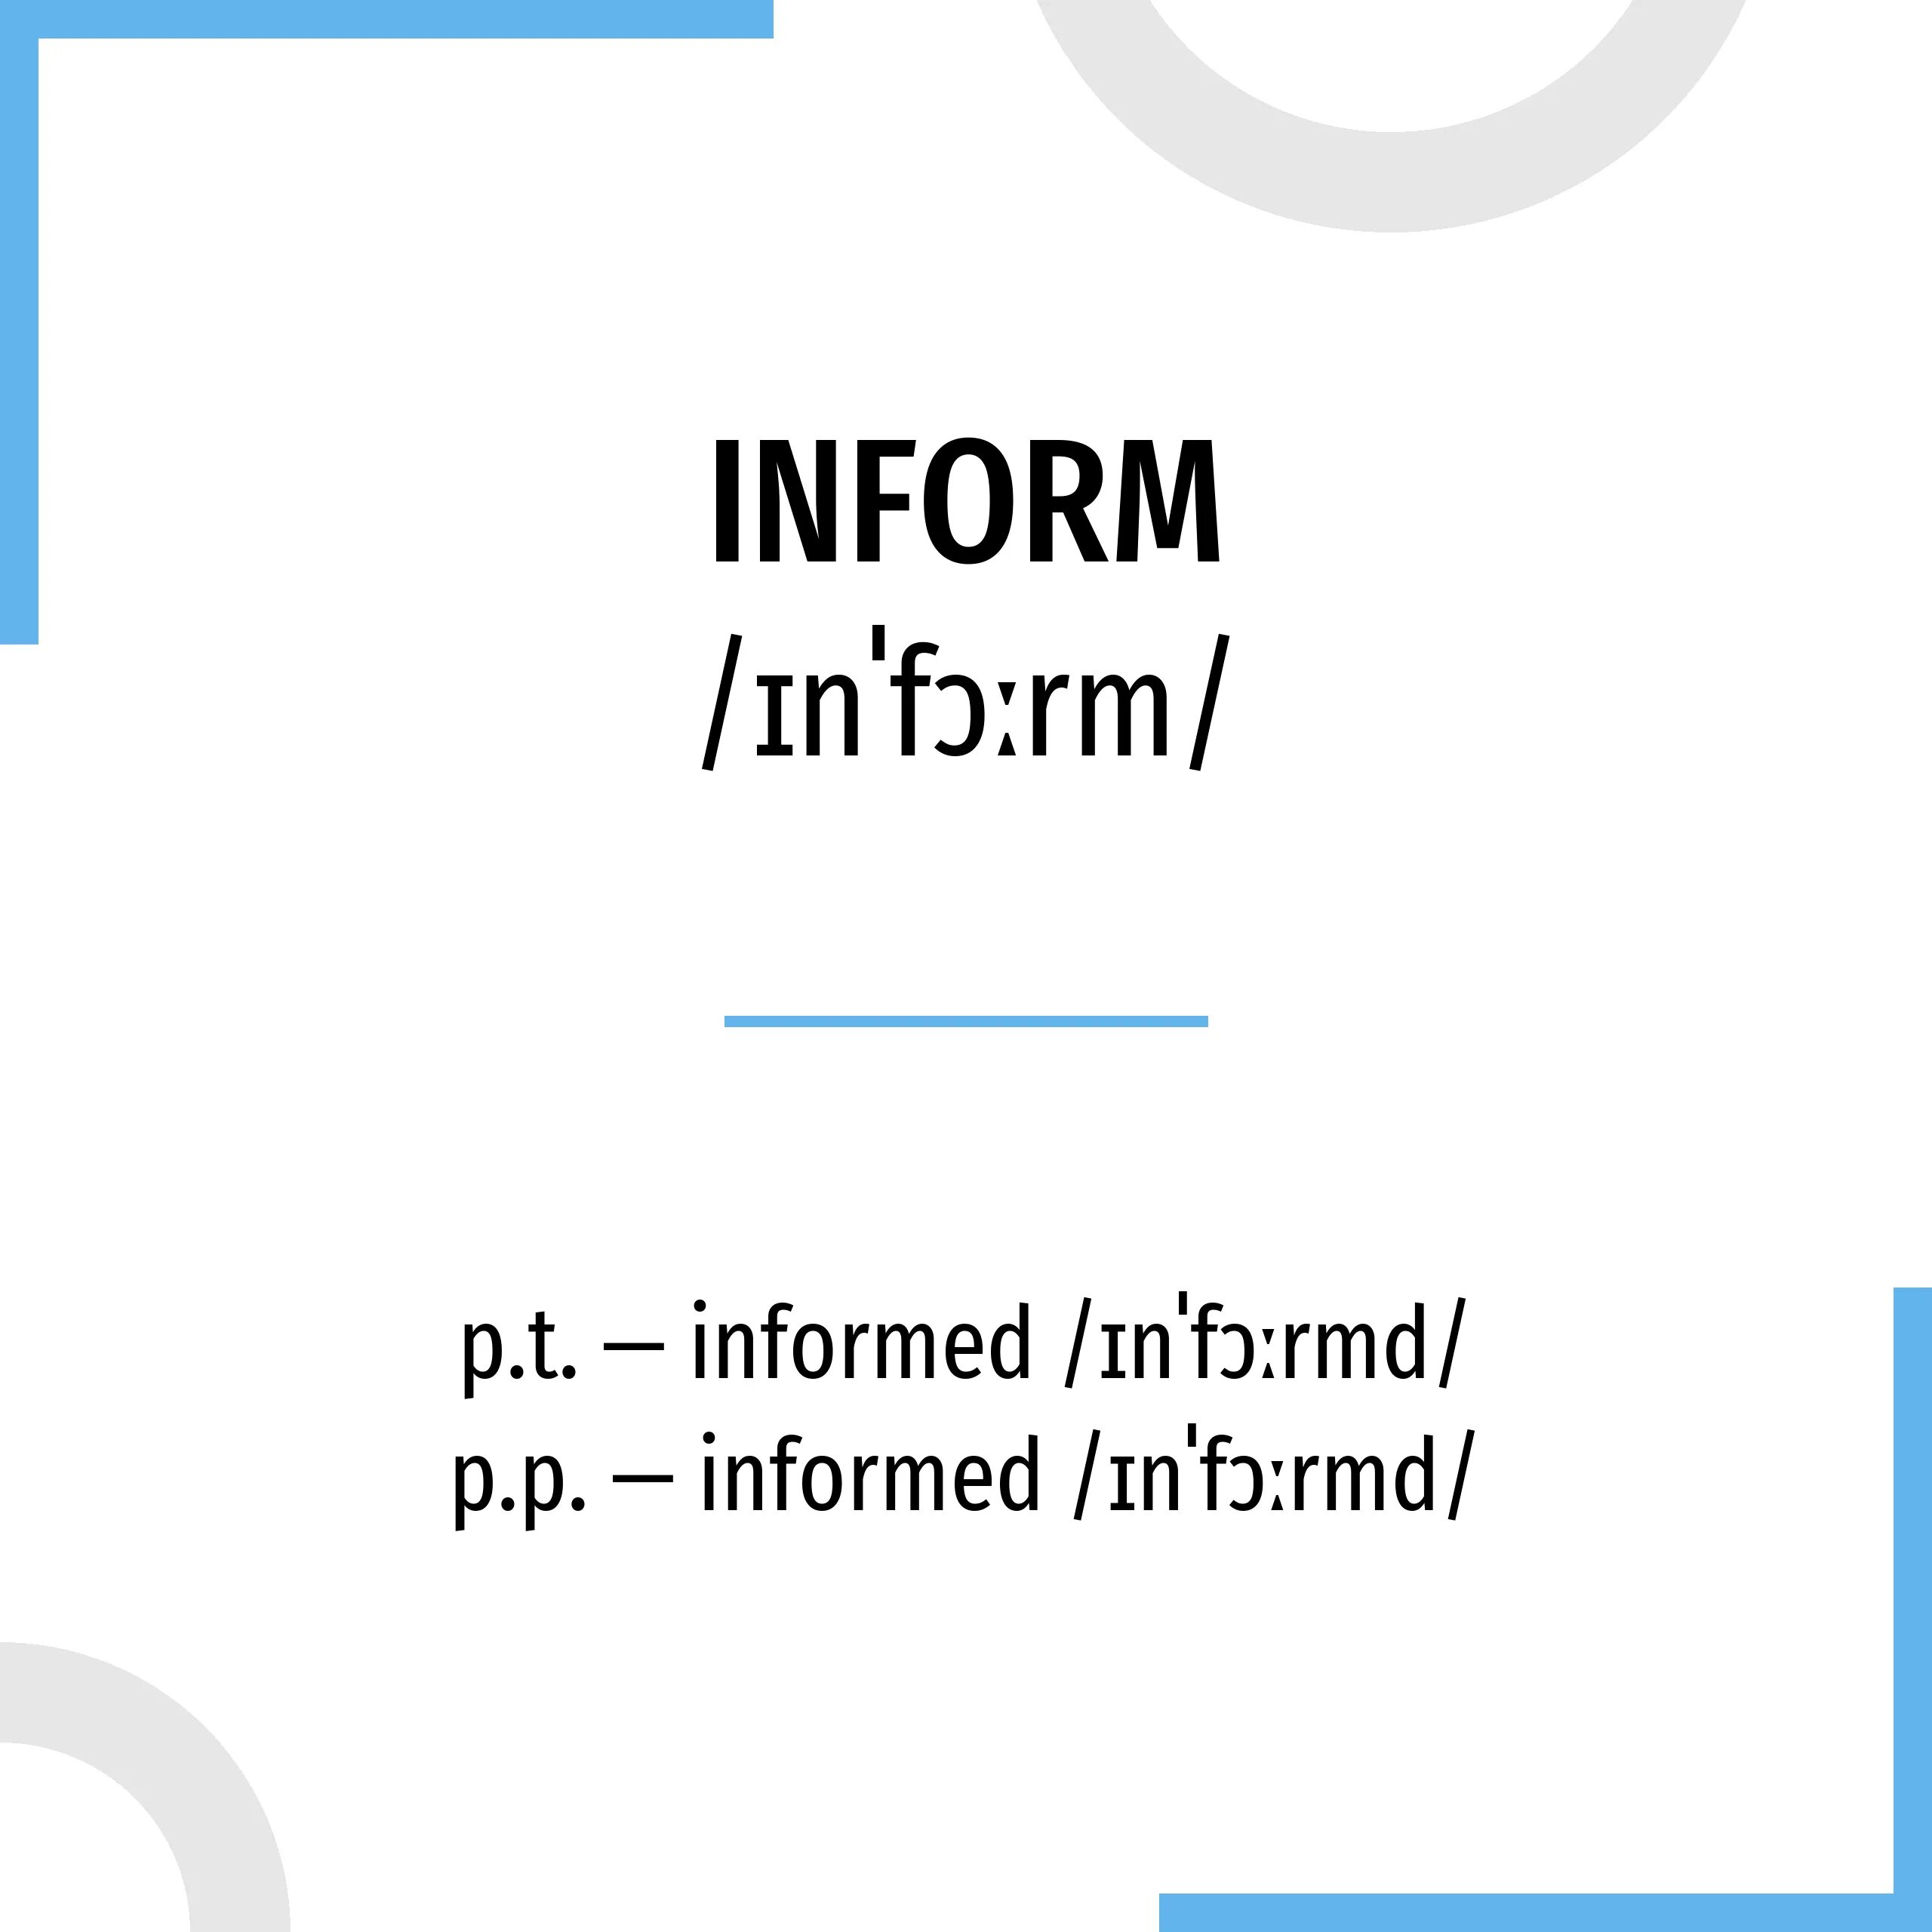 Inform 3 формы. Inform 3 формы глагола. Третья форма глагола информ. 3 Формы глагола informed.